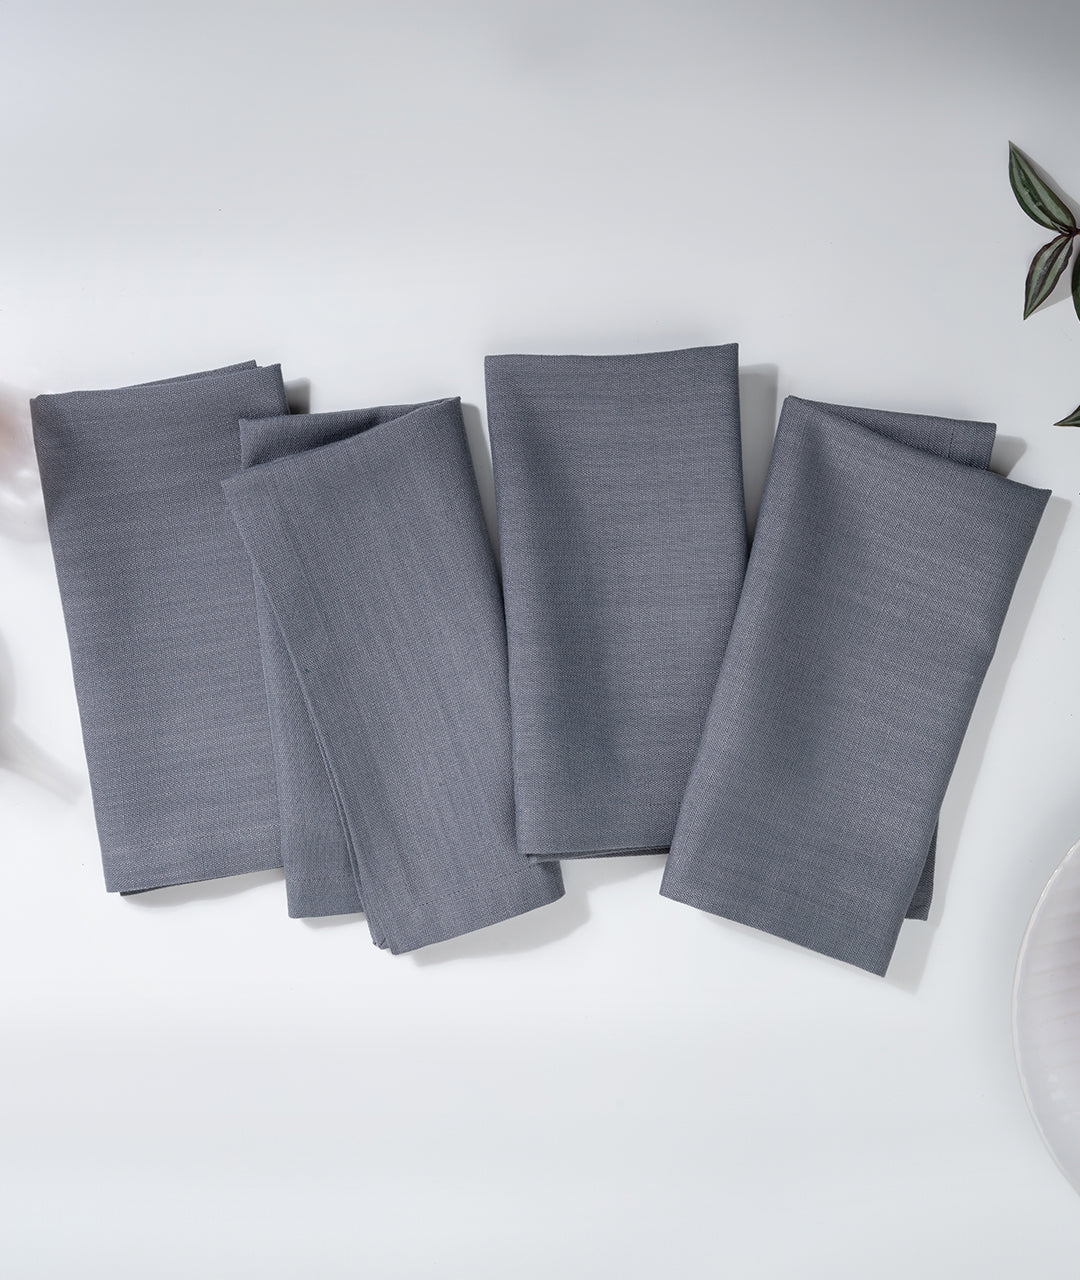 Charcoal Grey Linen Textured Dinner Napkins 20 x 20 Inch Set of 4 - Mitered Corner